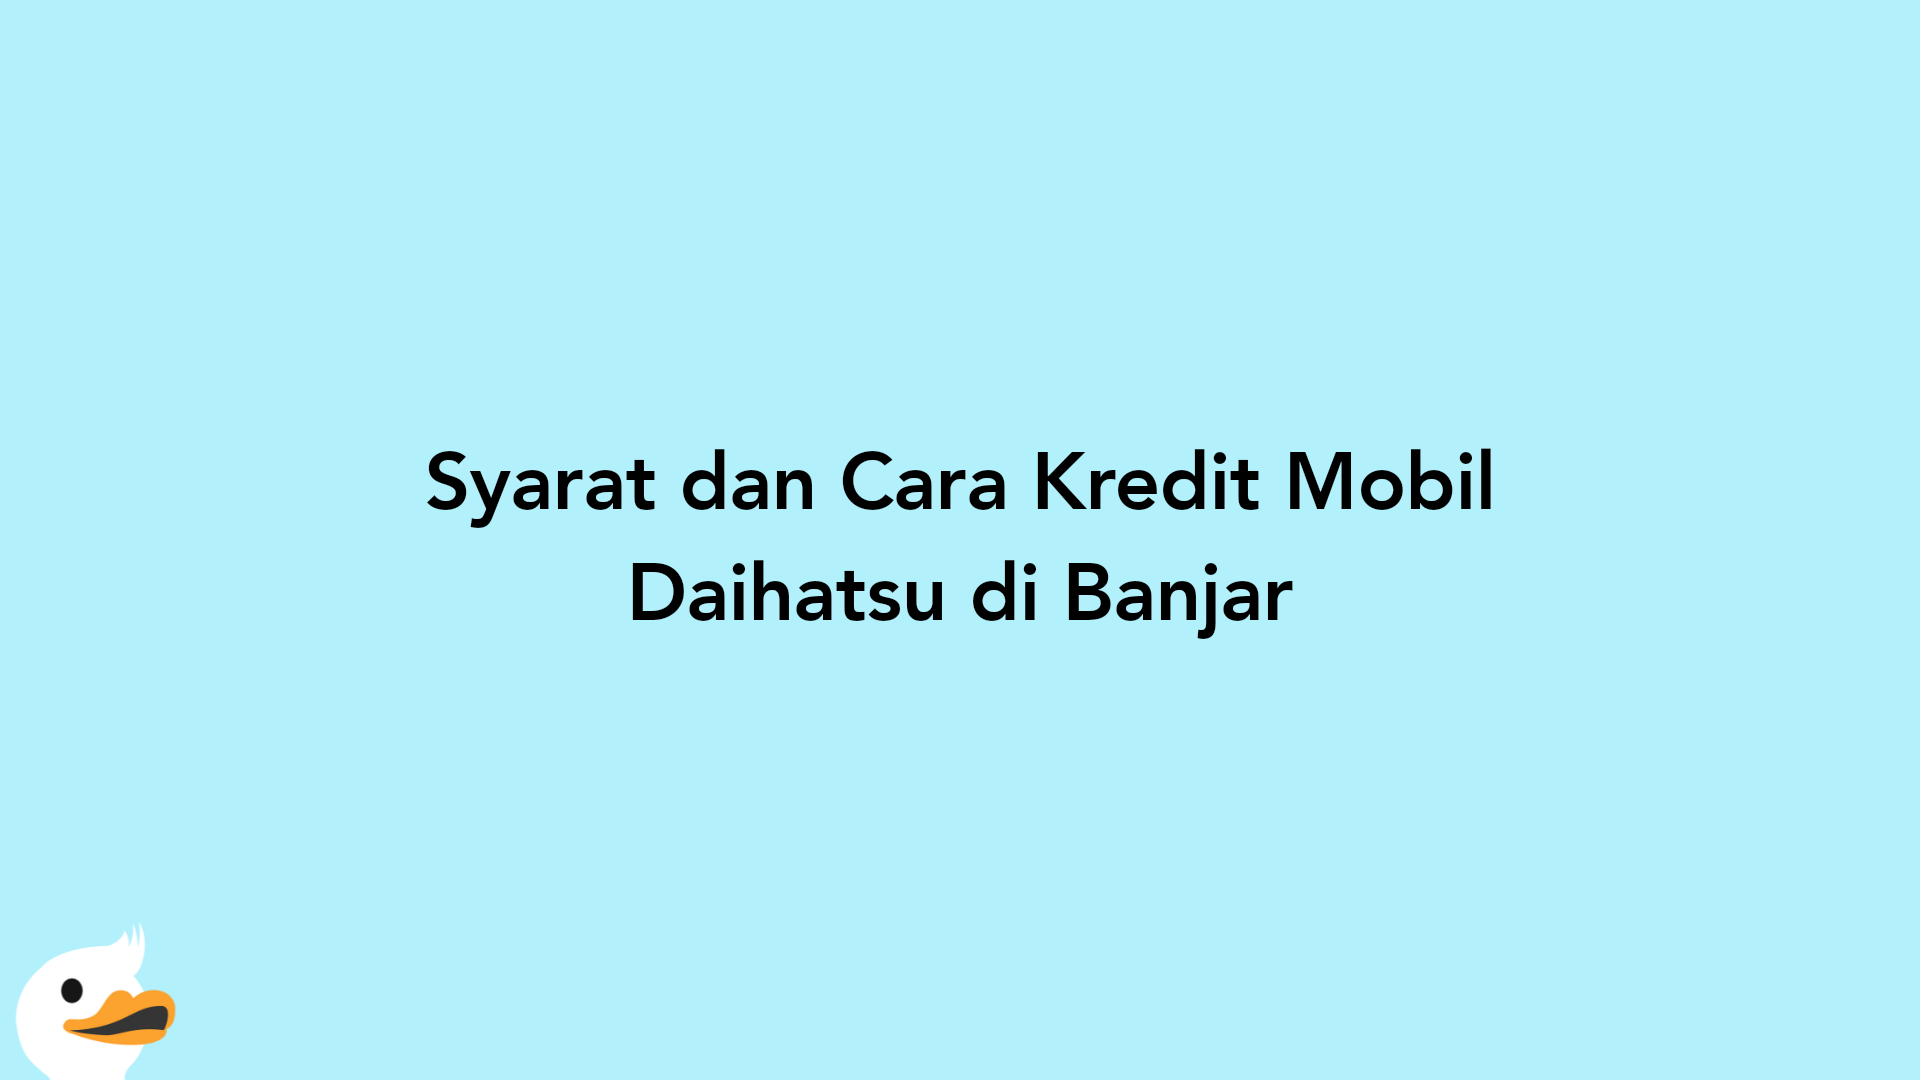 Syarat dan Cara Kredit Mobil Daihatsu di Banjar